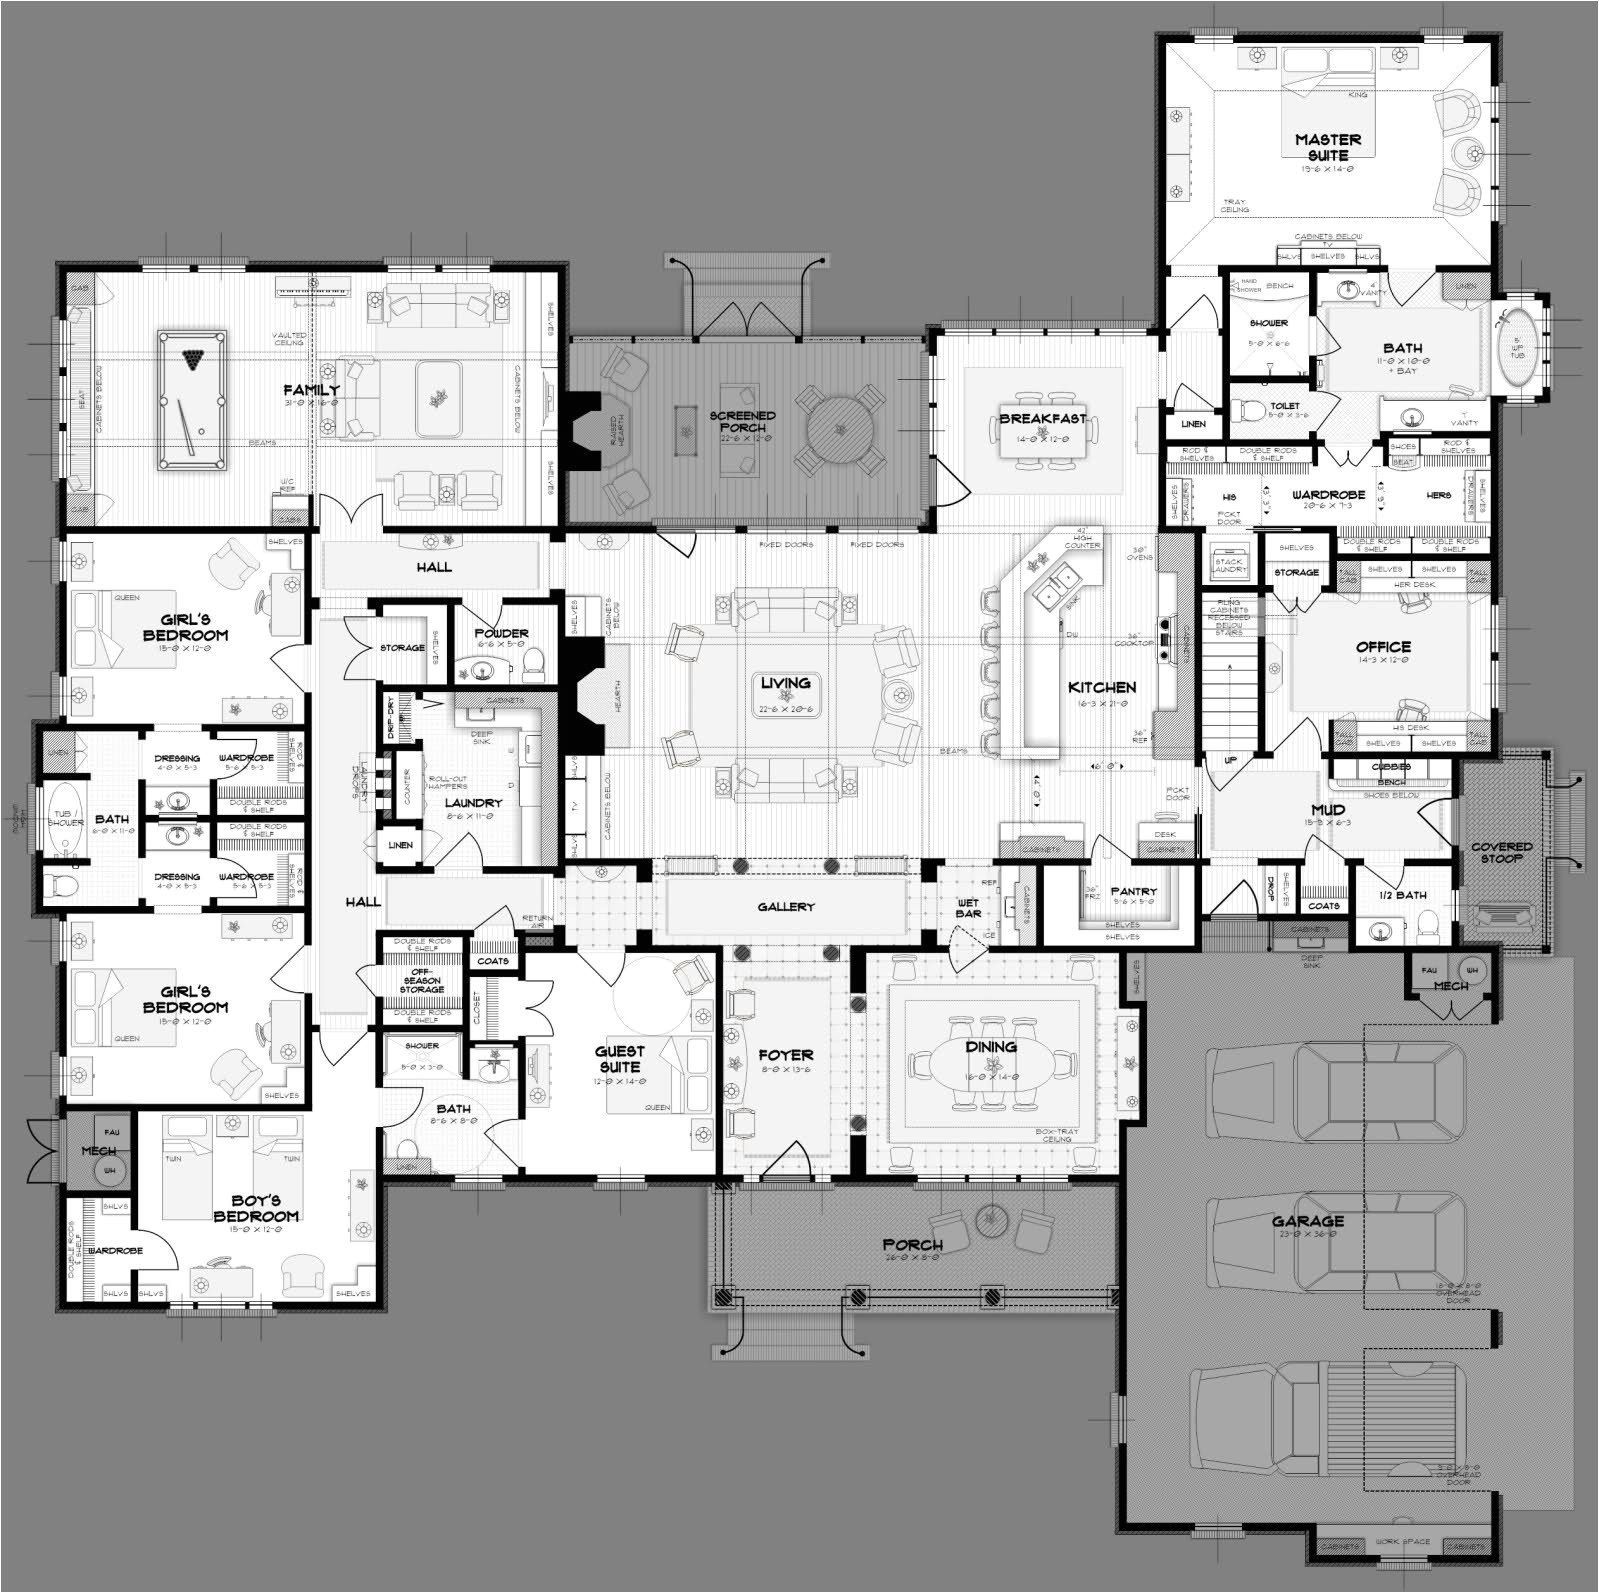 big 5 bedroom house plans my plans help needed with bedroom arrangement building a home